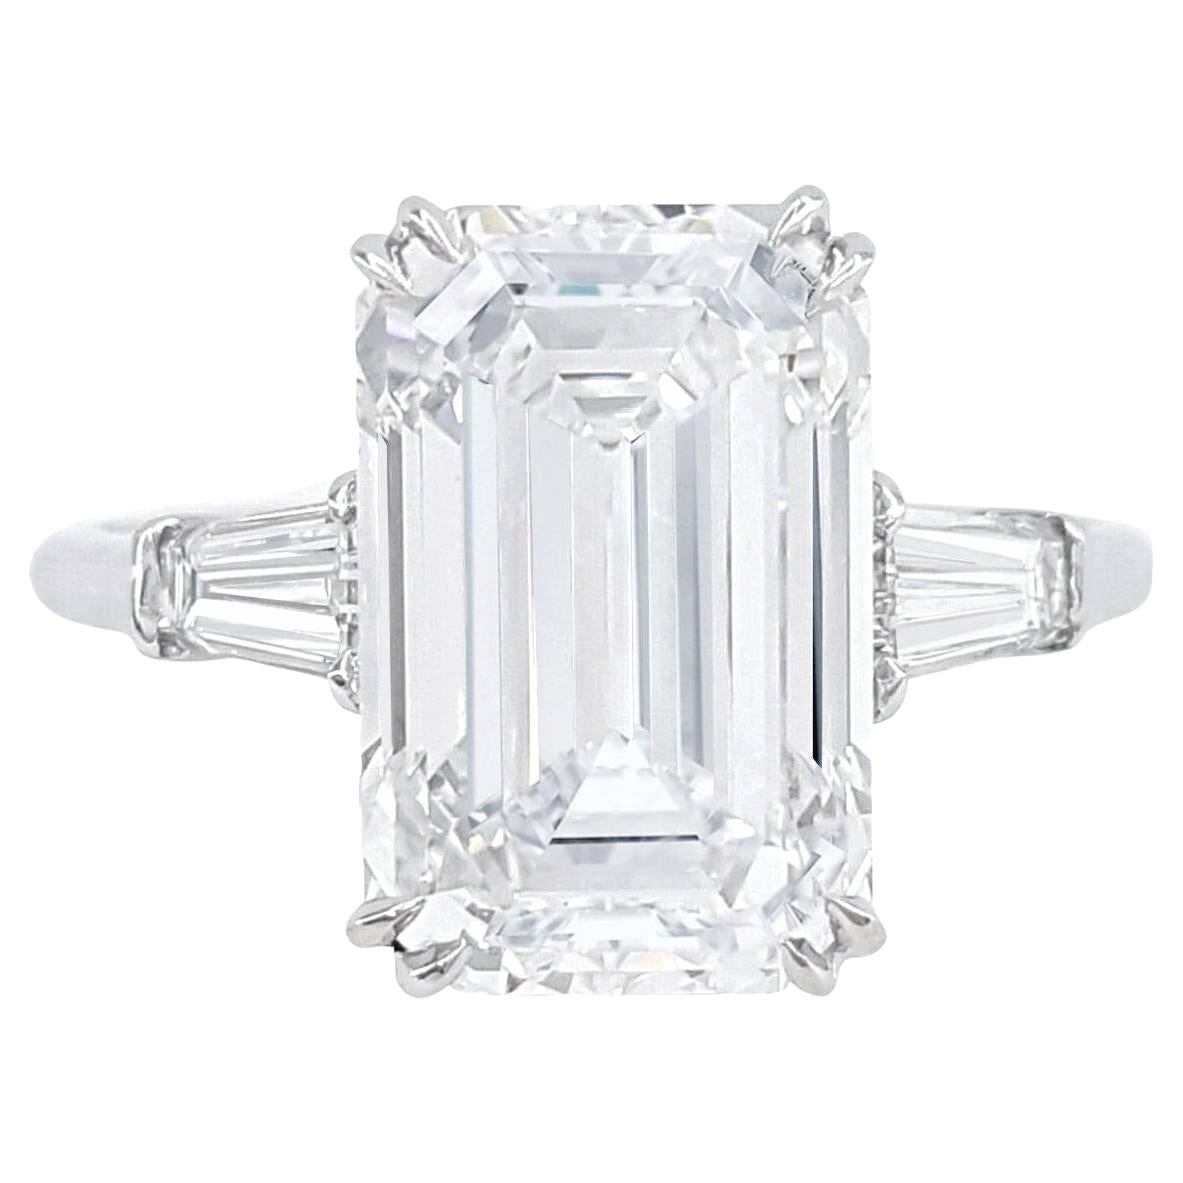 GIA Certified 6.03 Carat Emerald Cut Diamond Ring in Platinum